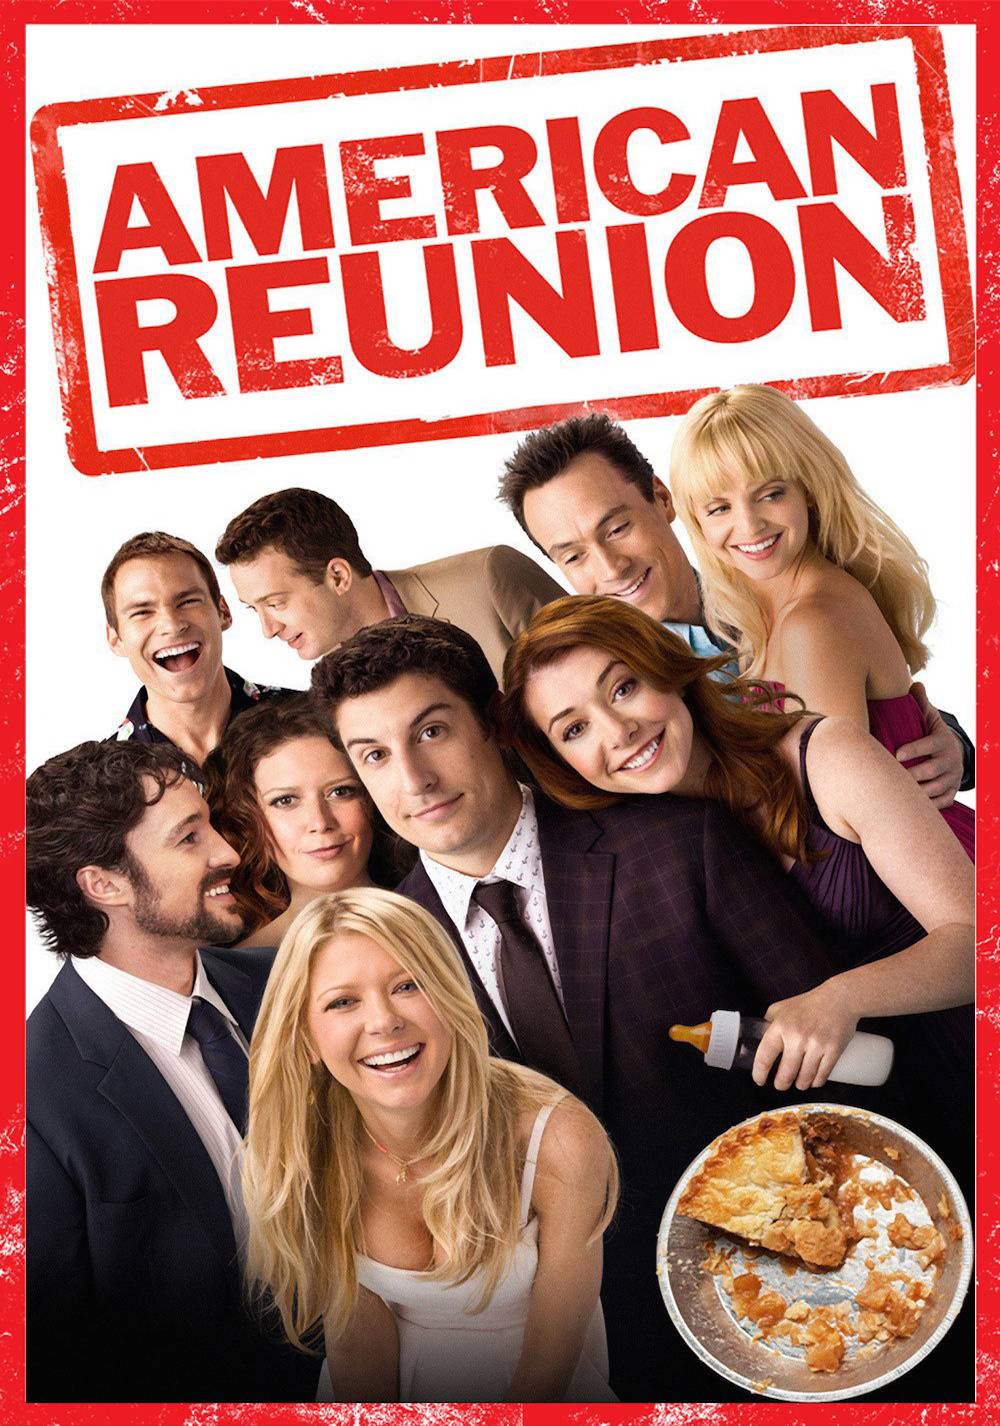 bradley scott edwards recommends American Pie Reunion Full Movie